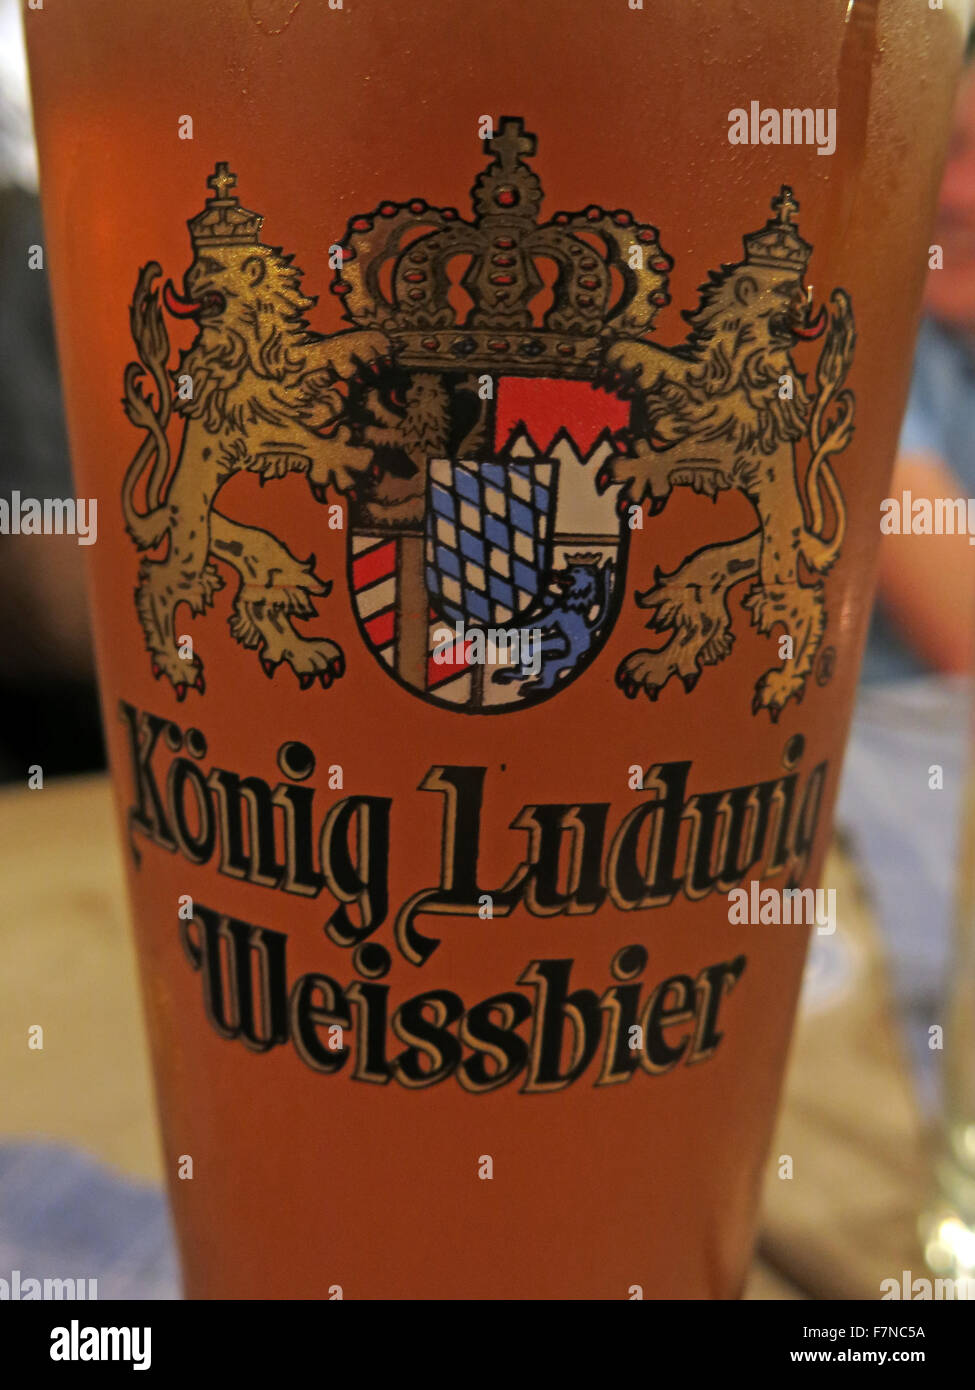 A glass of konig Ludwig Weissbier, Munich, Germany Stock Photo